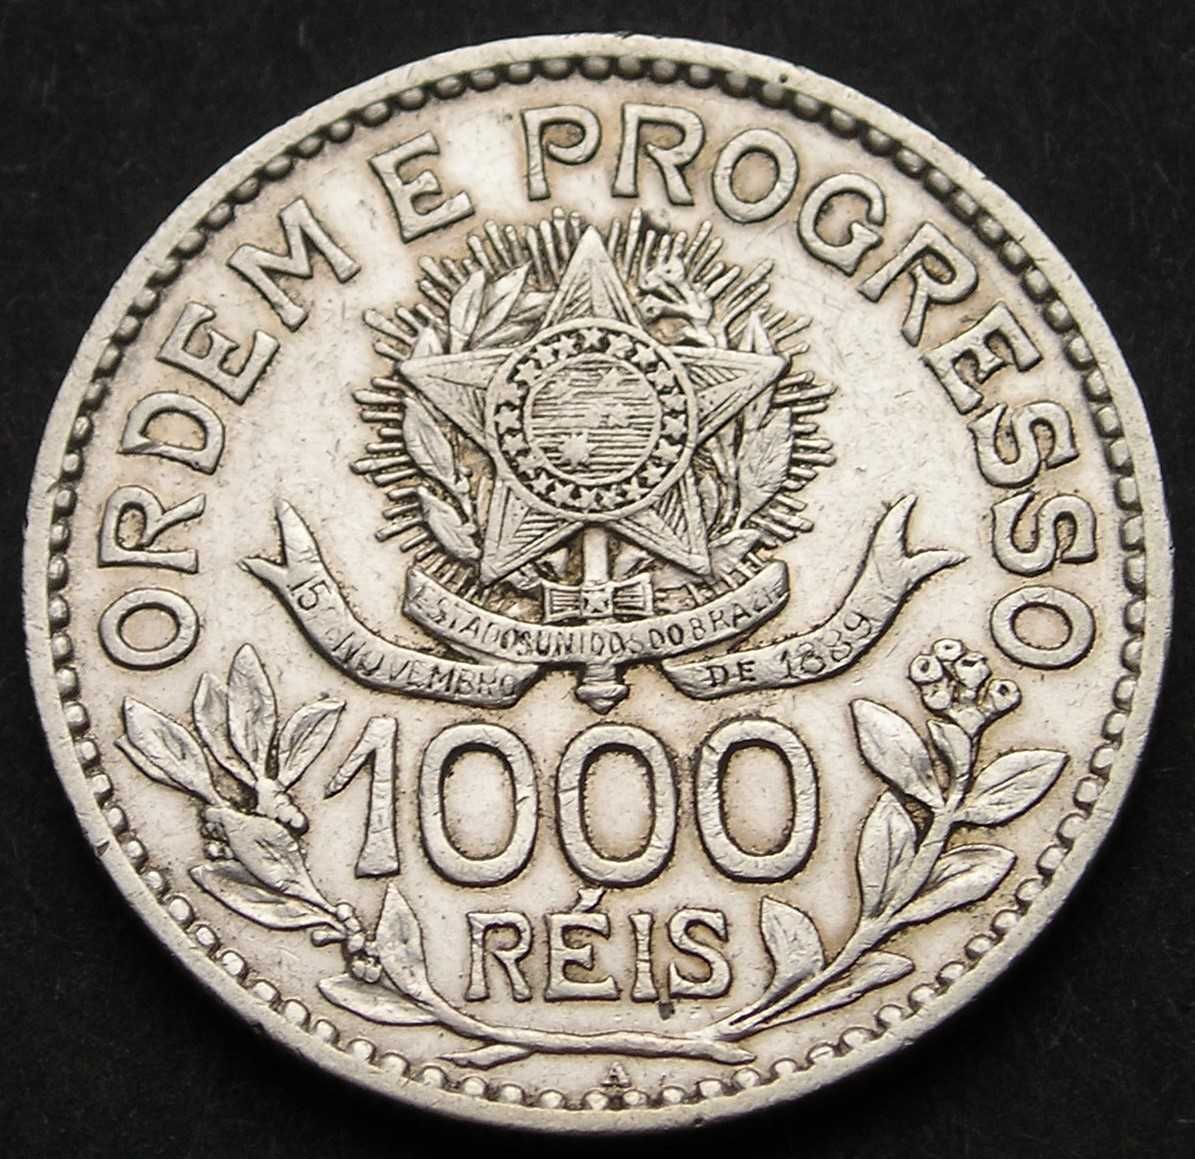 Brazylia 1000 reis 1913 - srebro